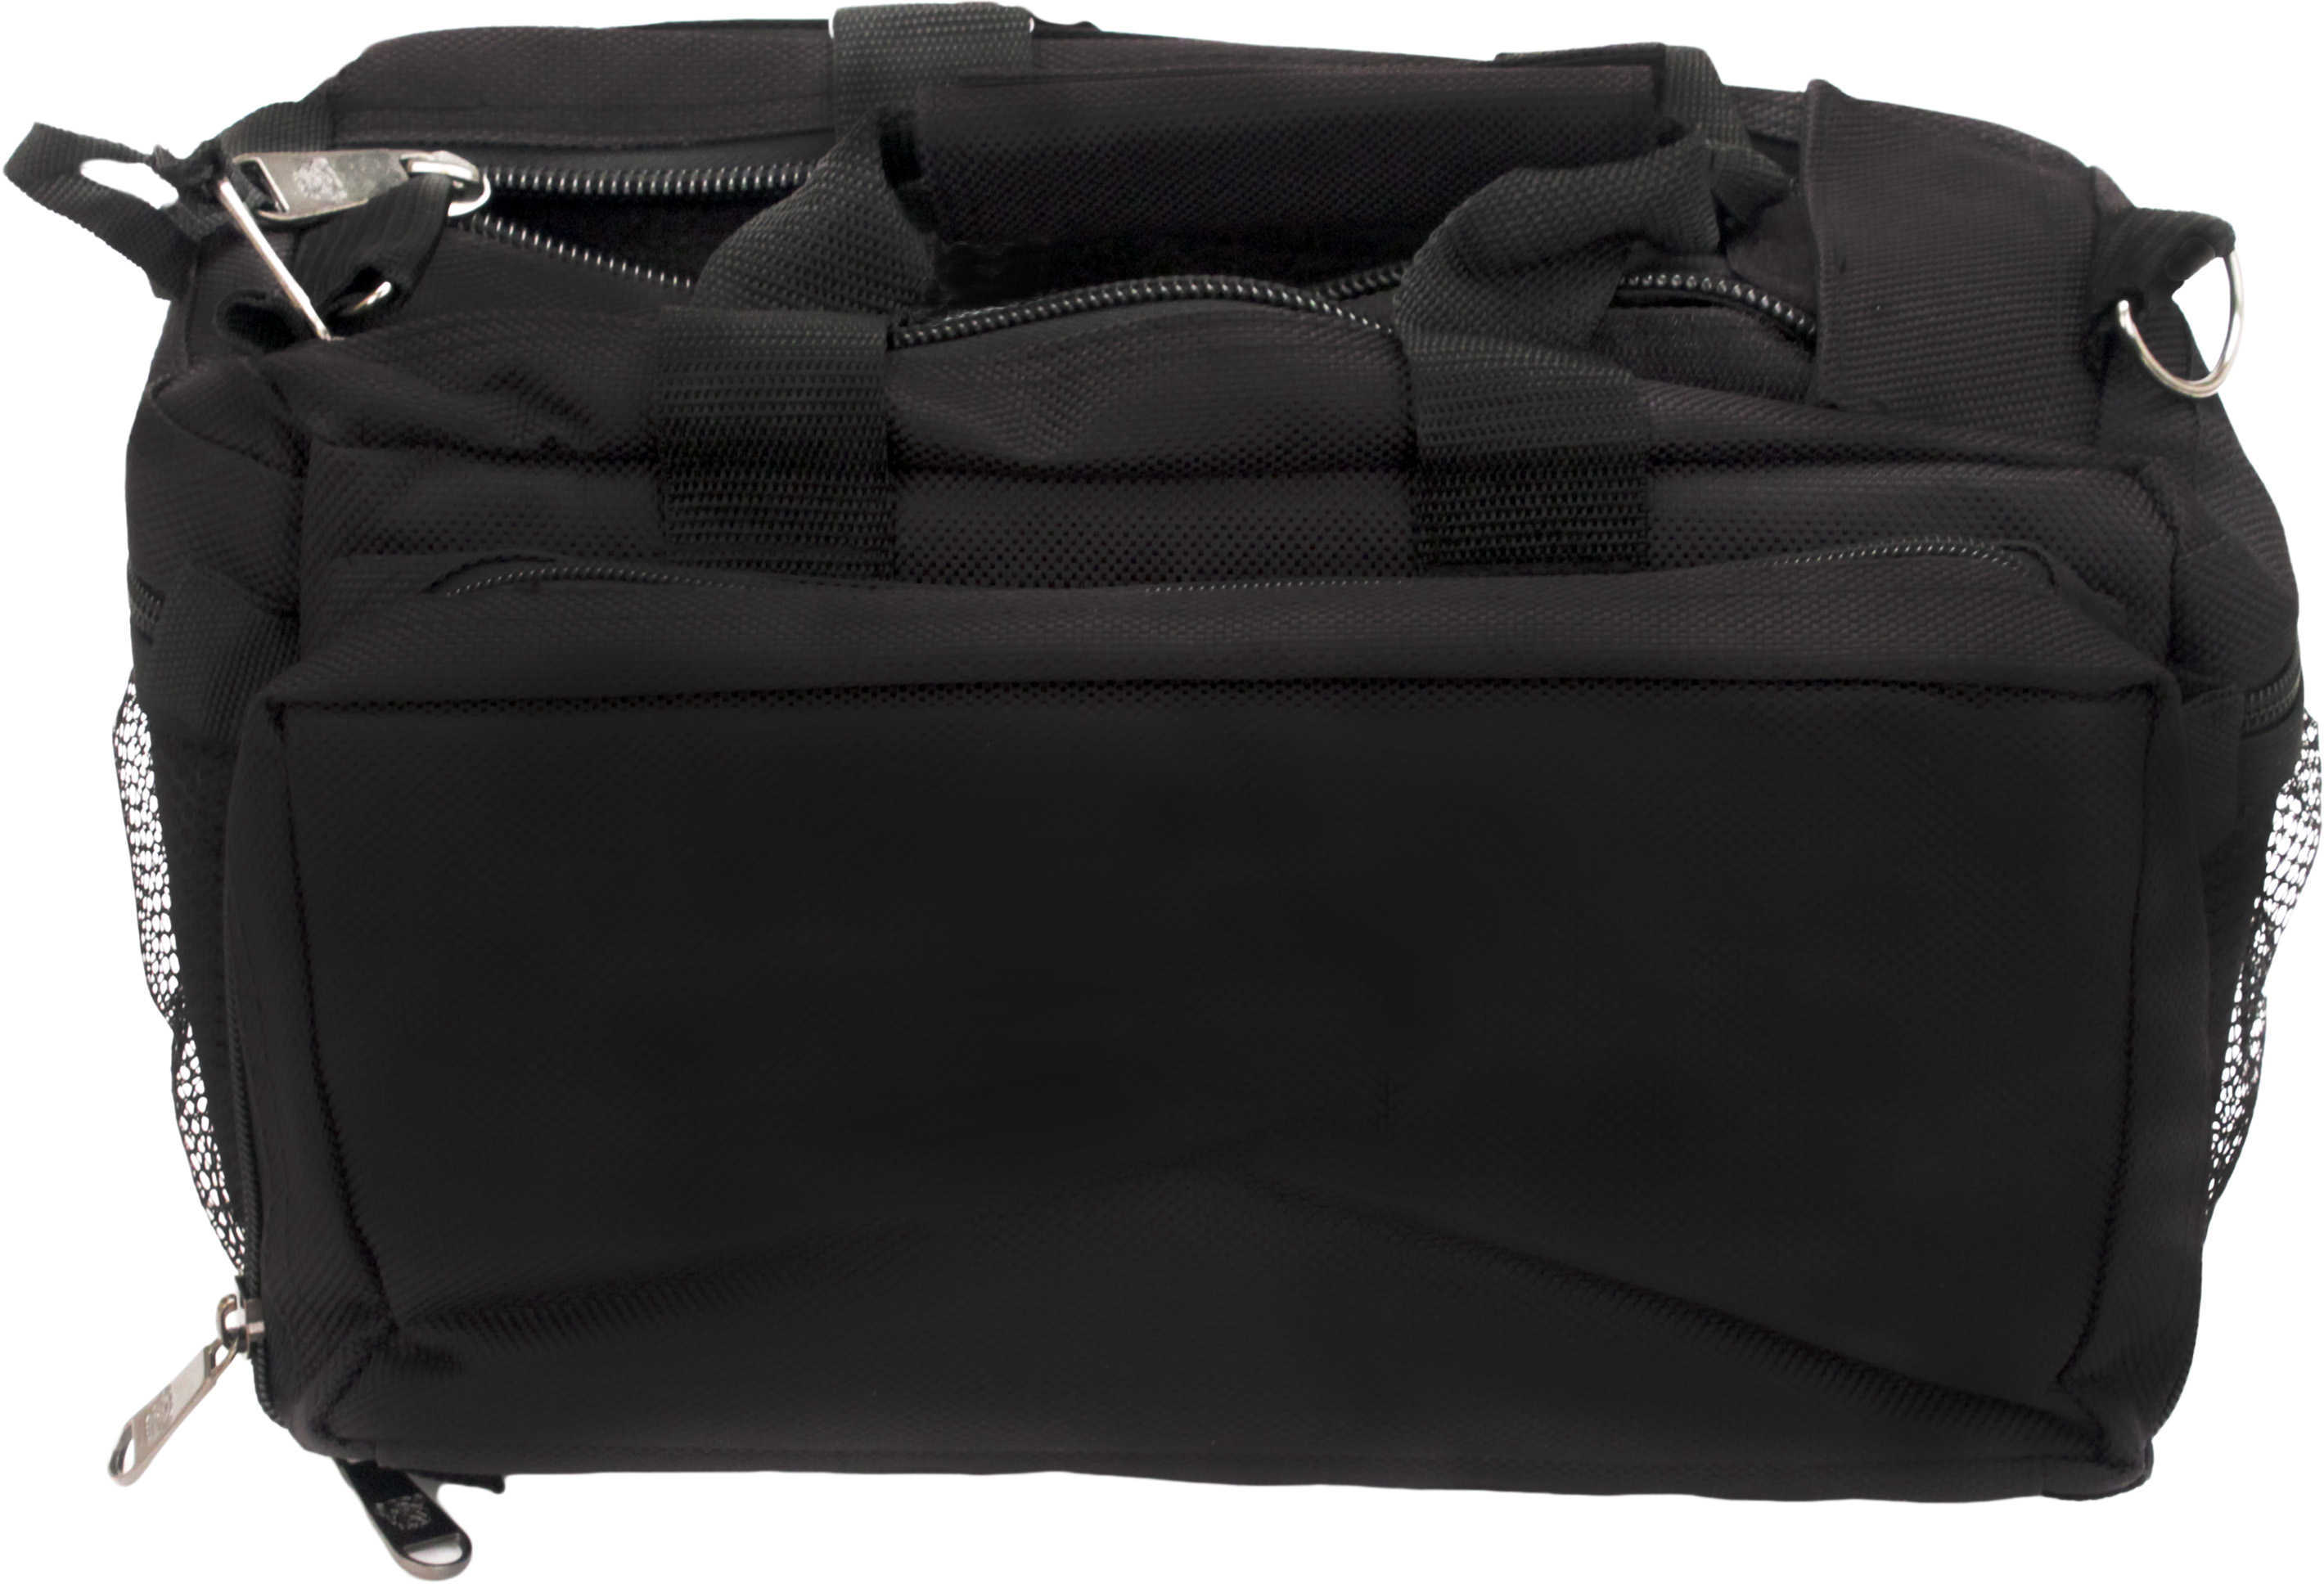 Bulldog Cases Deluxe Range Bag with Strap Black BD910 84756